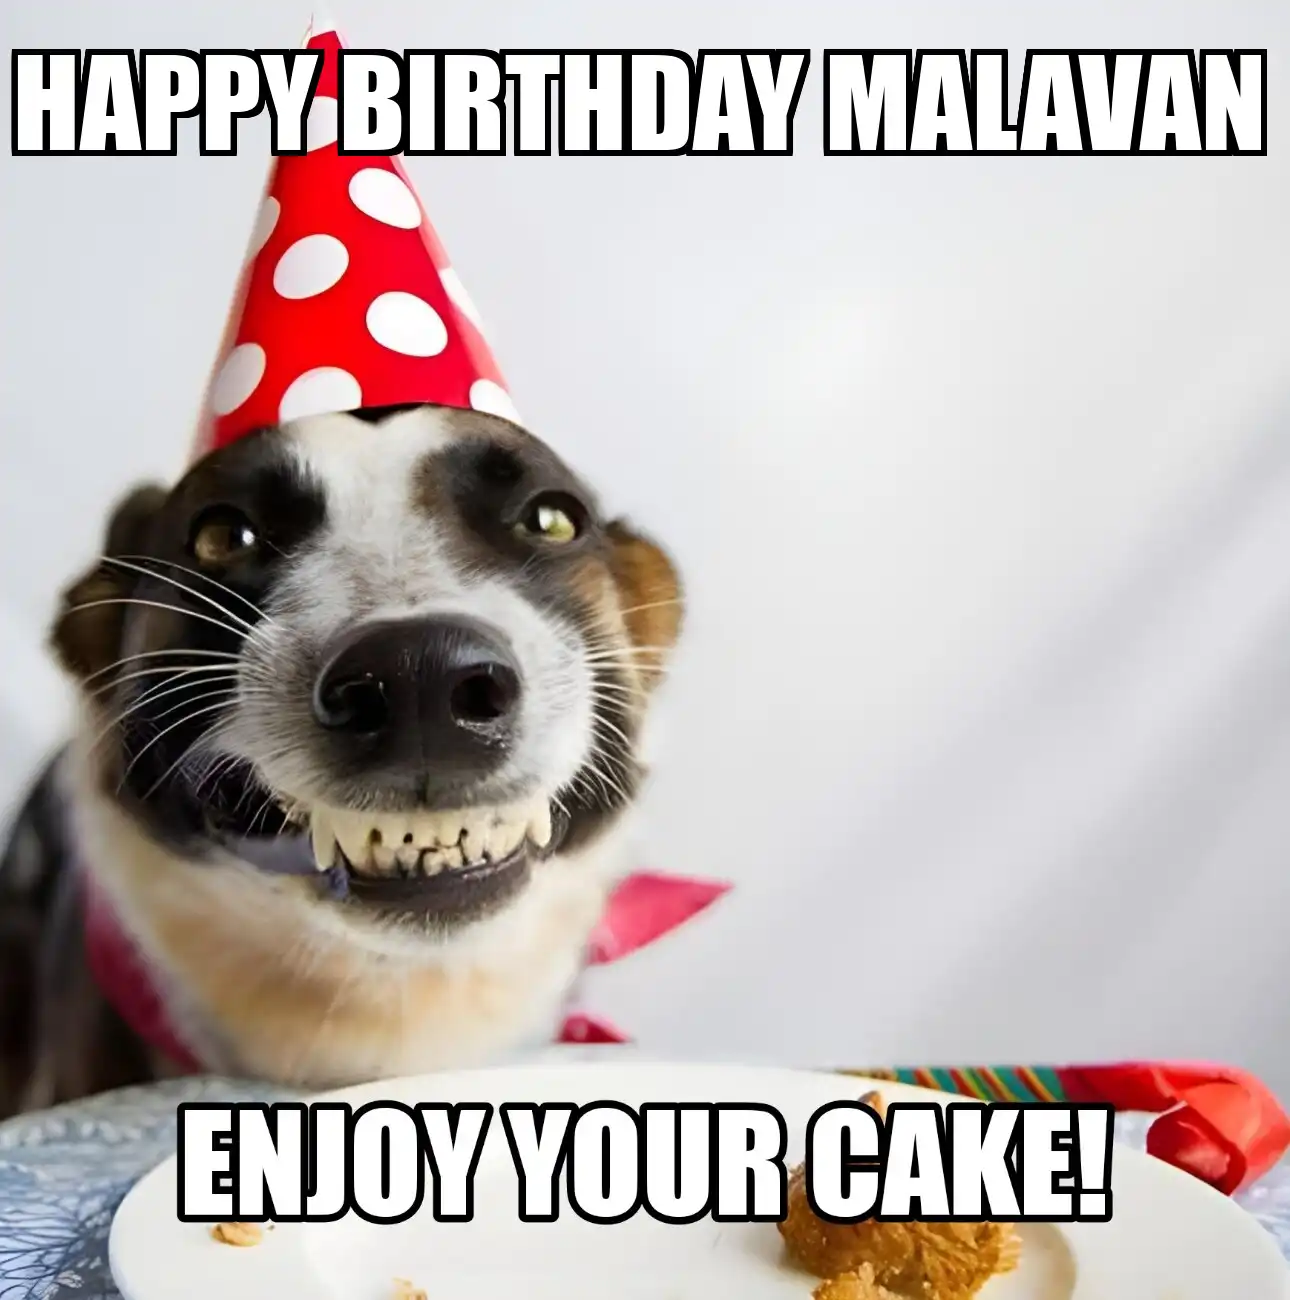 Happy Birthday Malavan Enjoy Your Cake Dog Meme